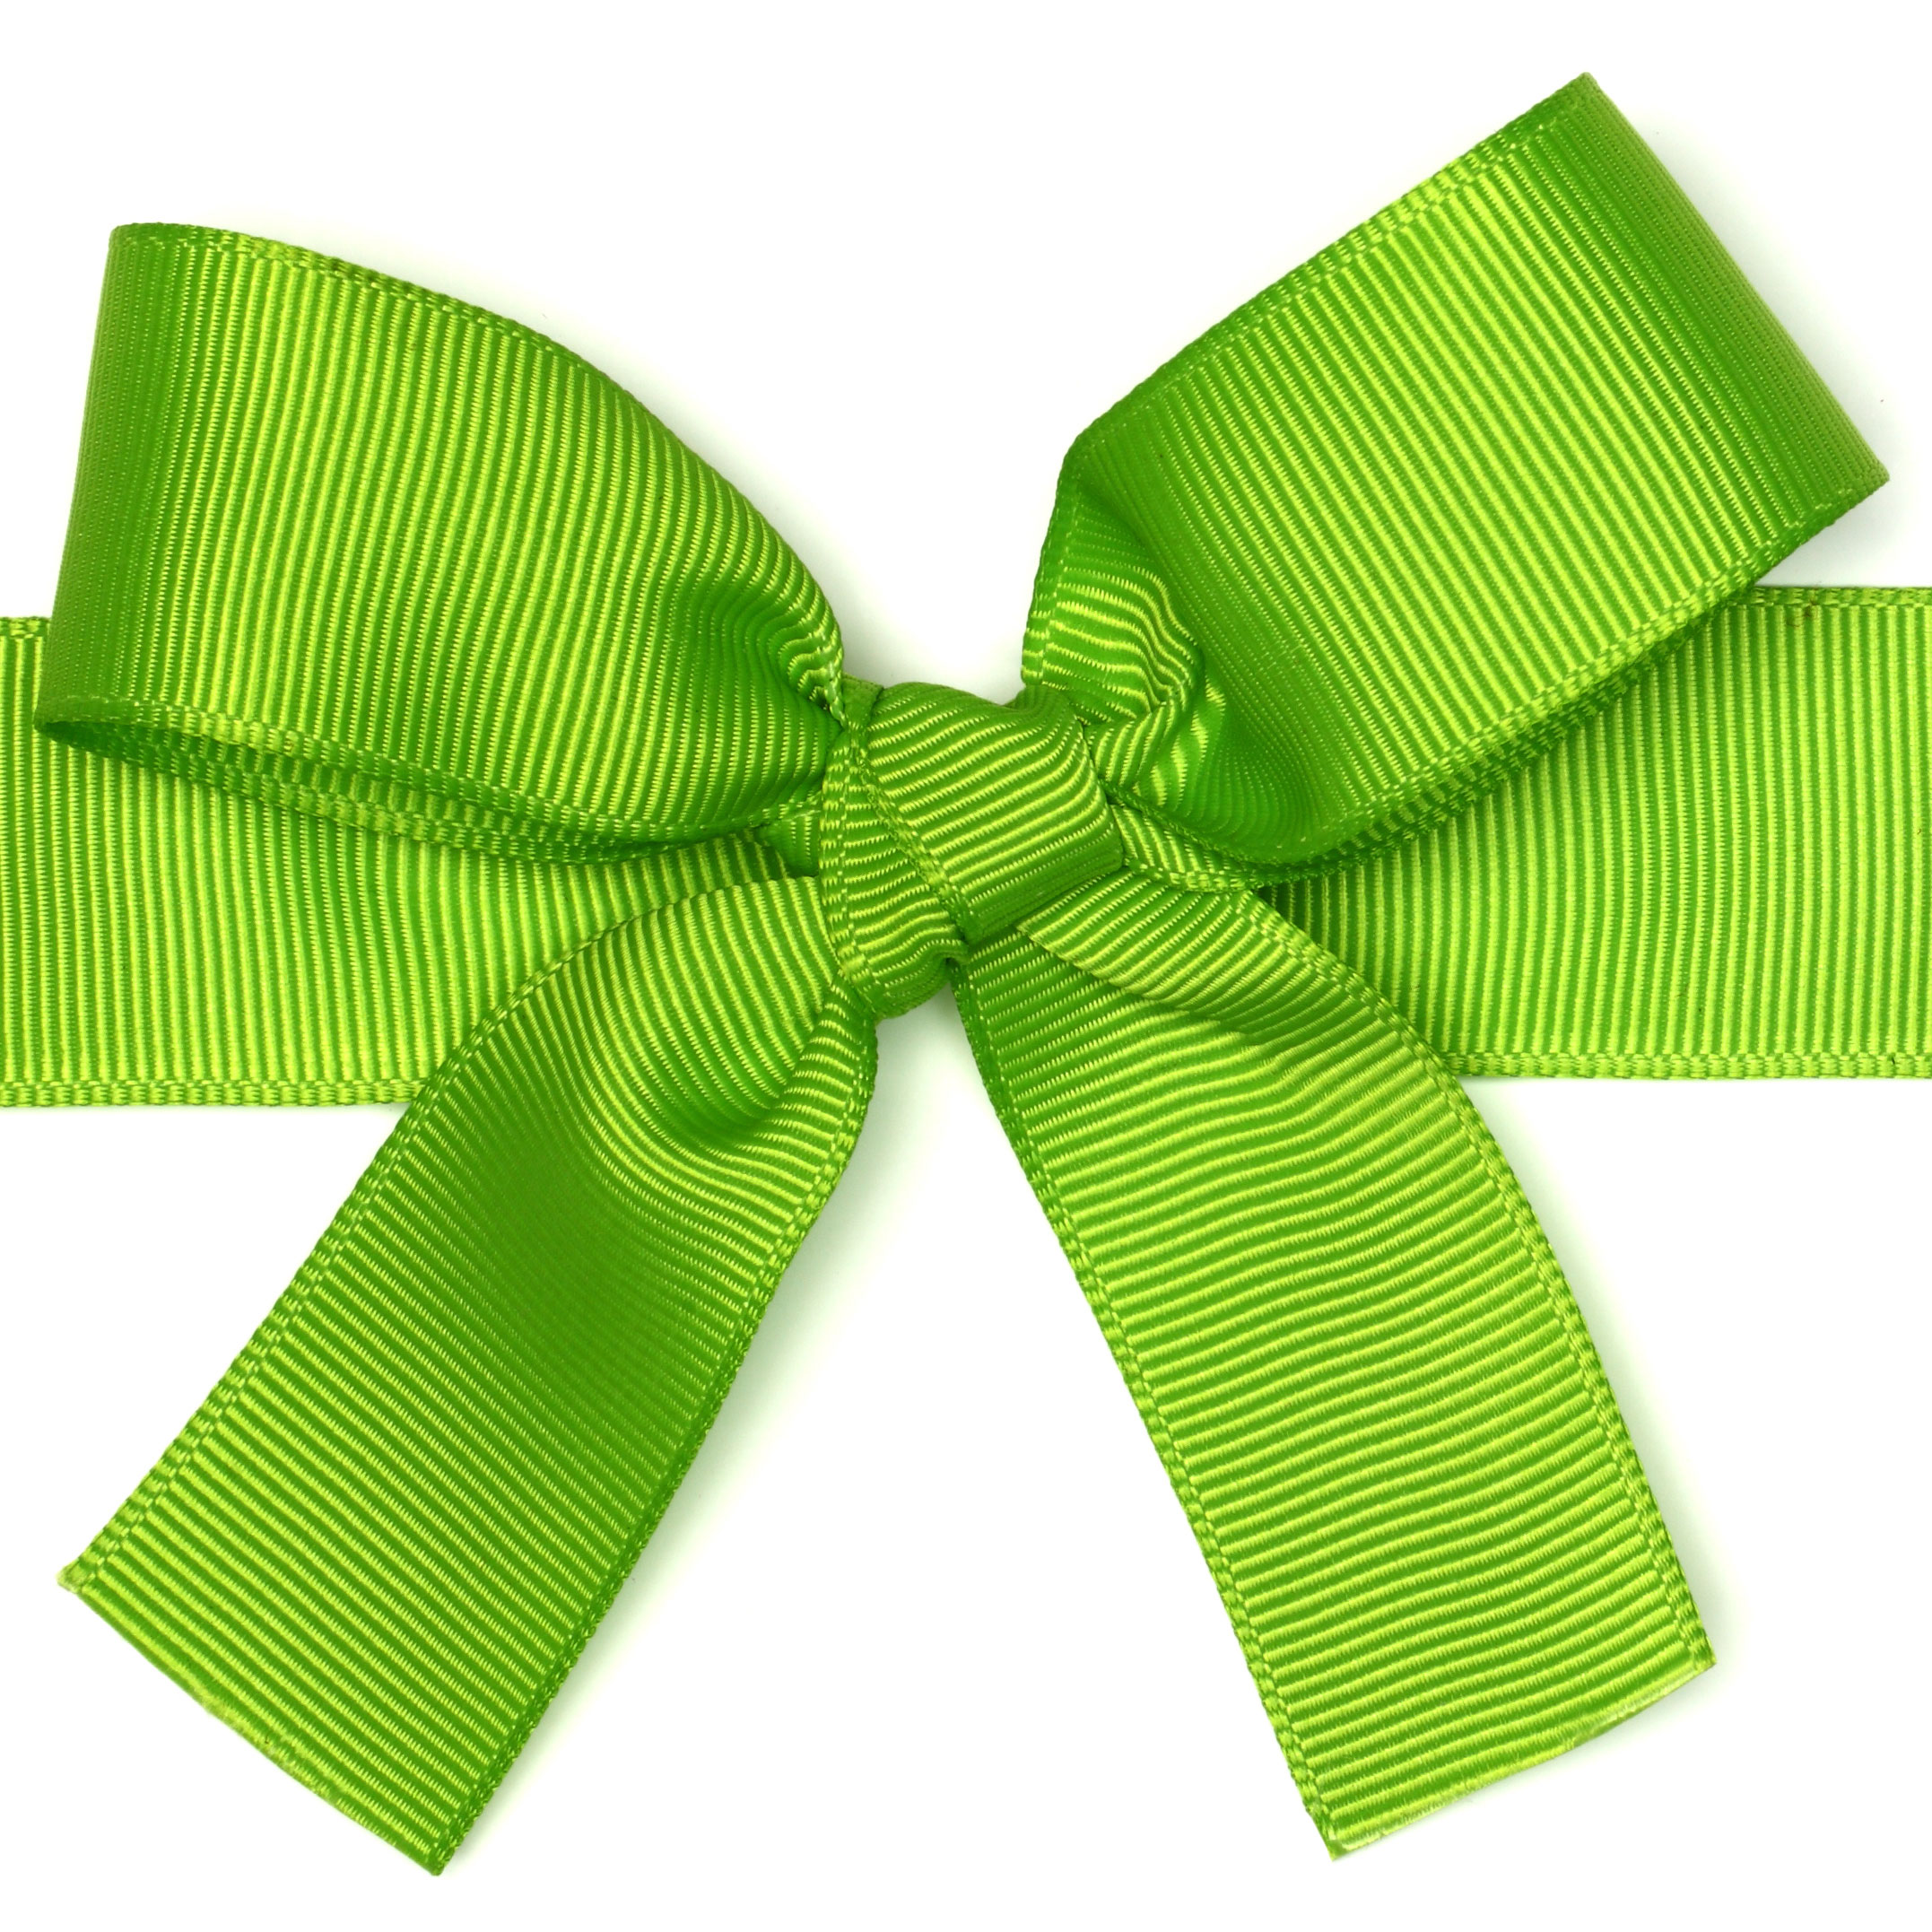 green ribbon tied into a bow